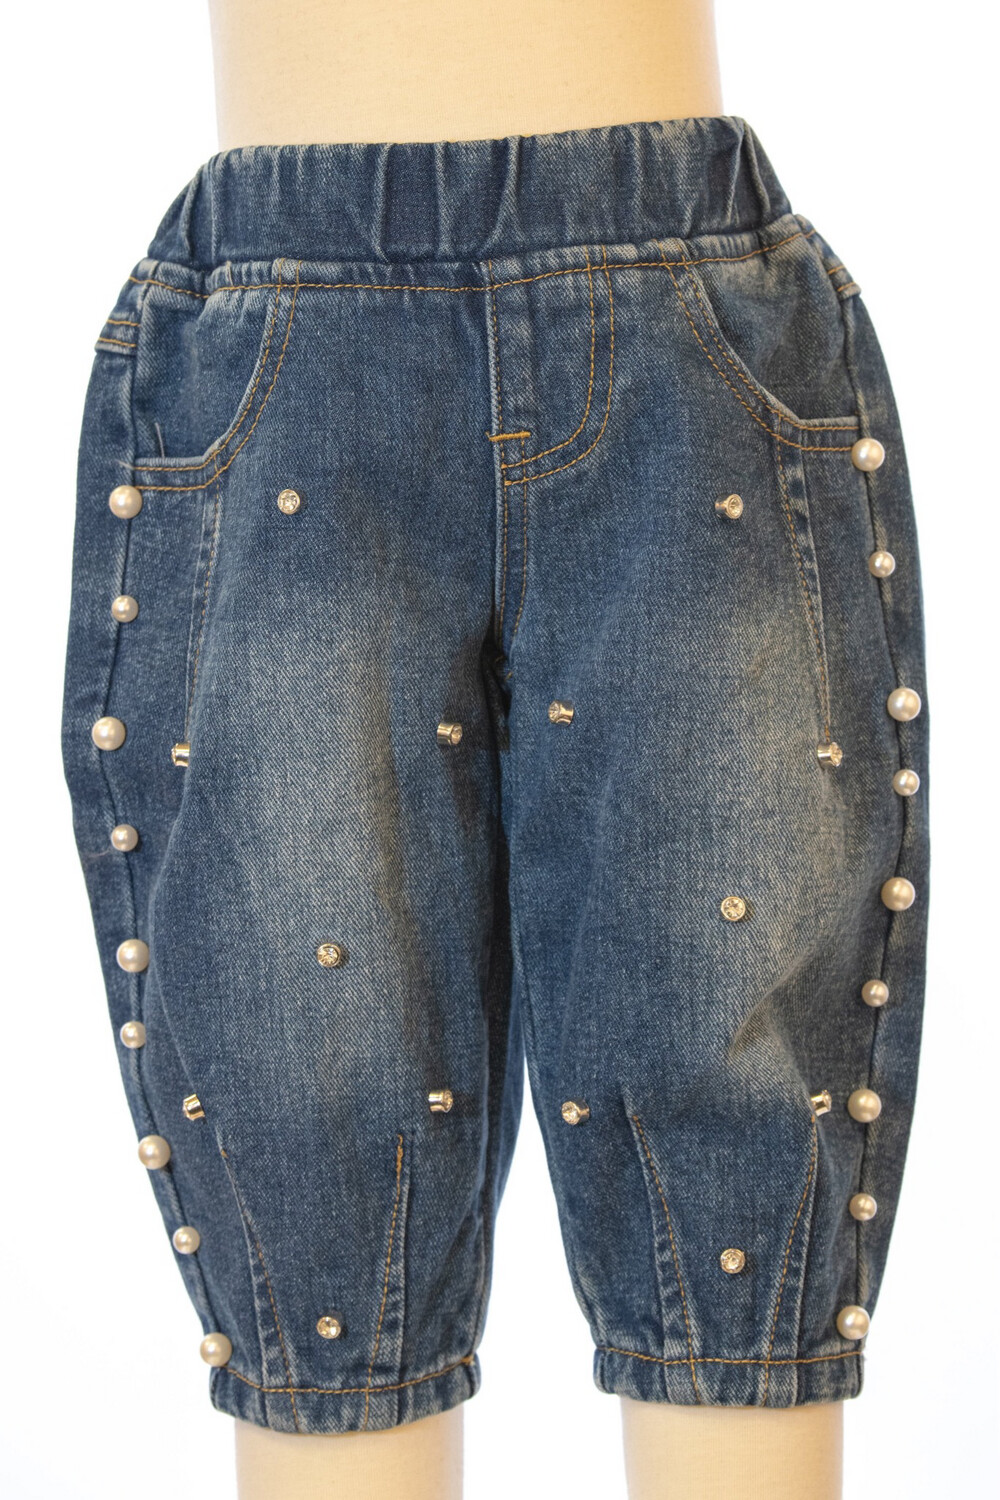 Rhinestone Studded Pearl Jeans